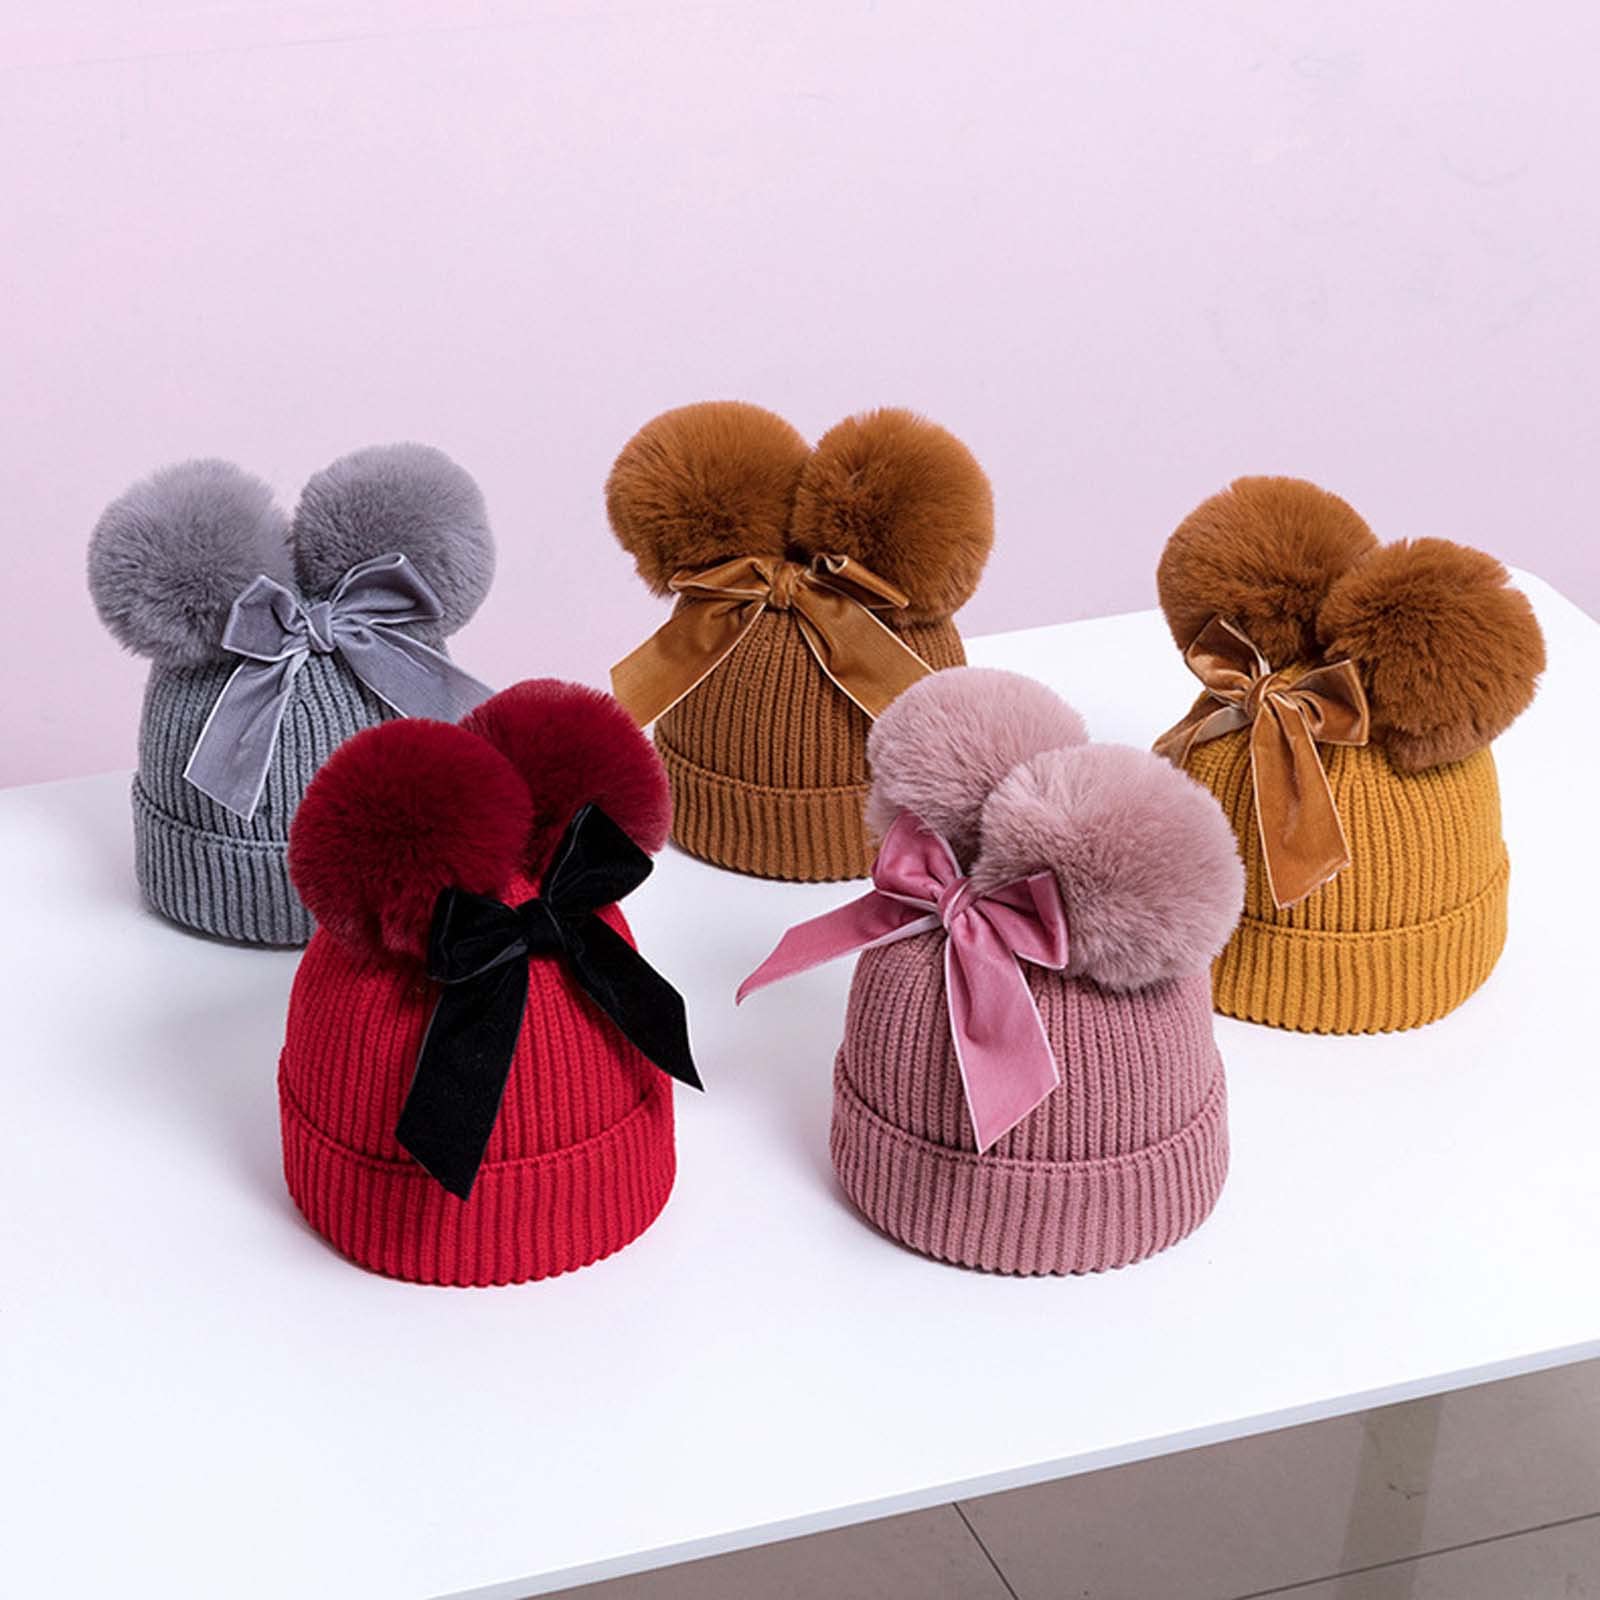 Toddler Baby Boy Girl Knitted Pompom Beanie Hat Thicken Warm Crochet Bow Double Pom Beanie Cap Kids Winter Hats Black